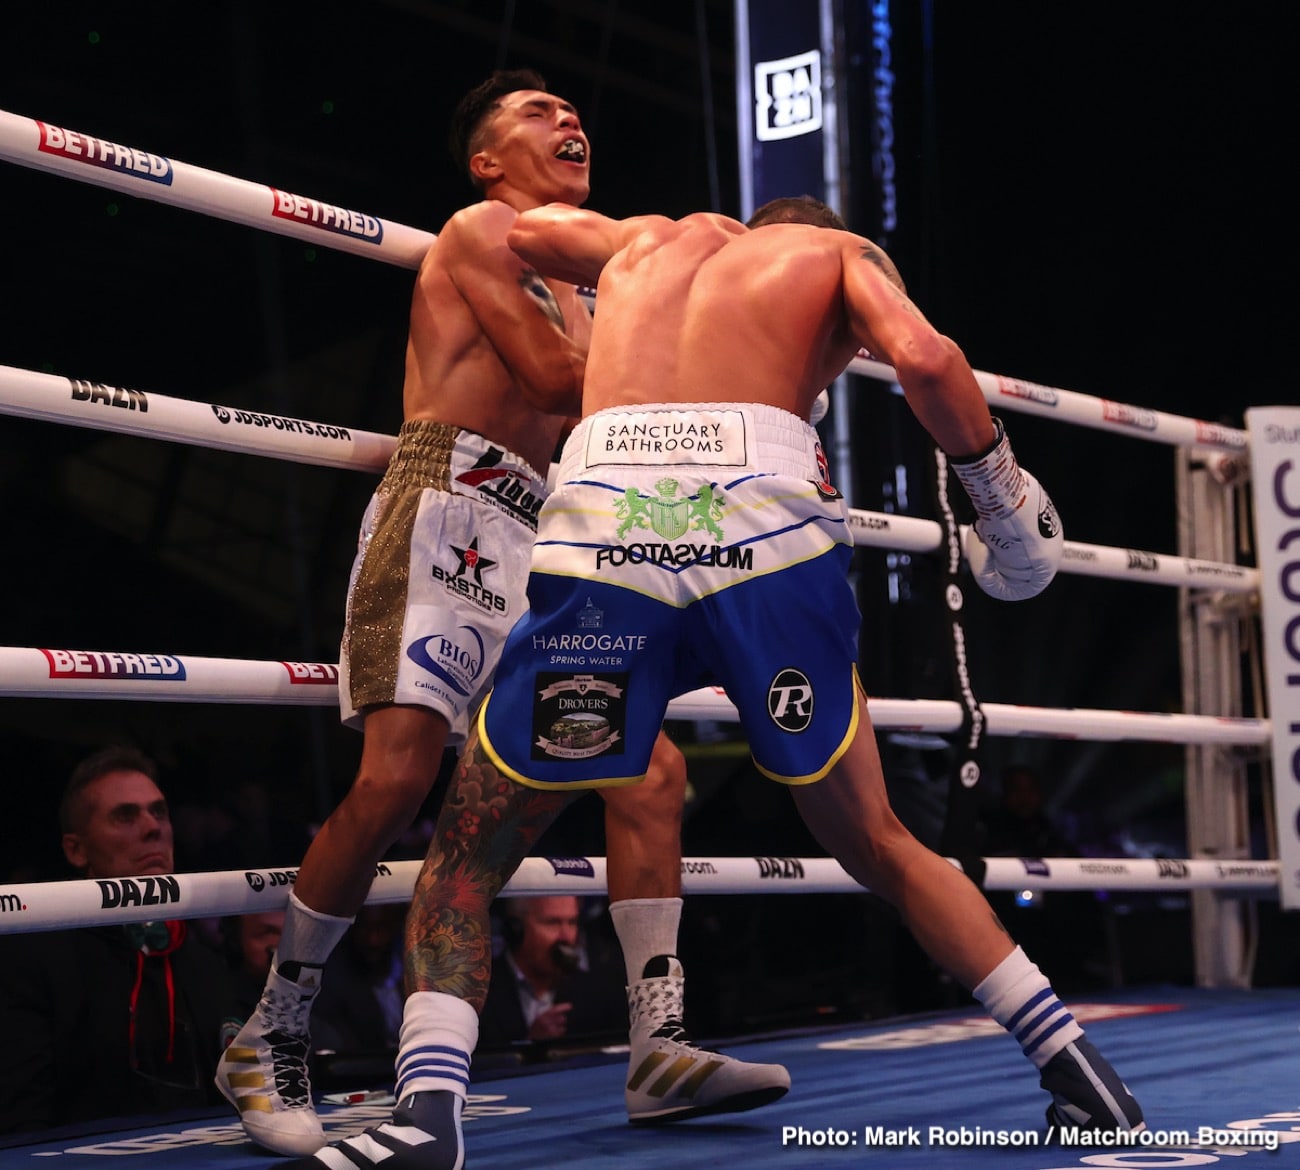 Josh Warrington boxing image / photo